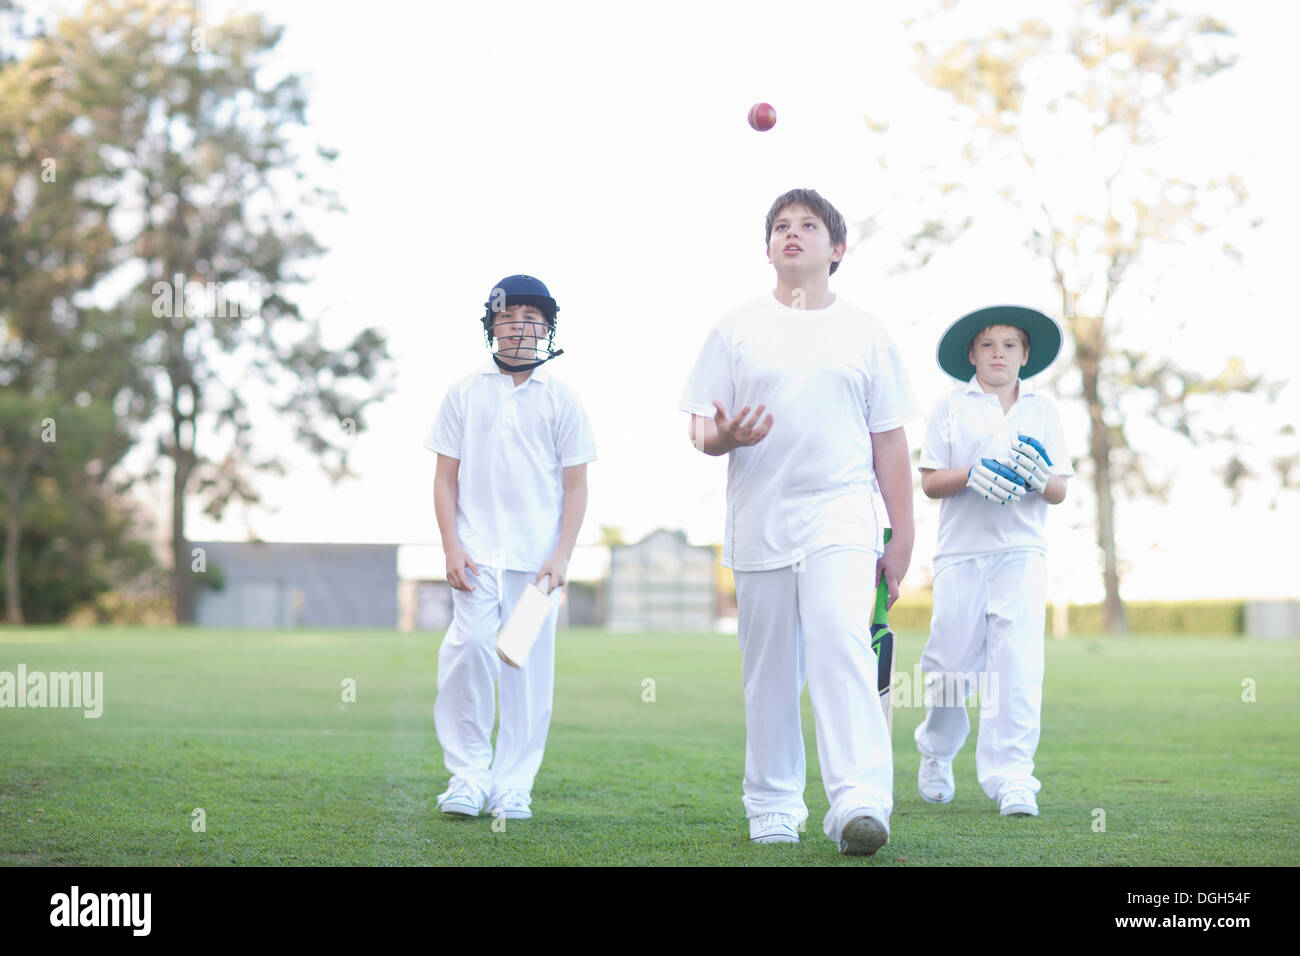 Three boys walking on cricket pitch Stock Photo